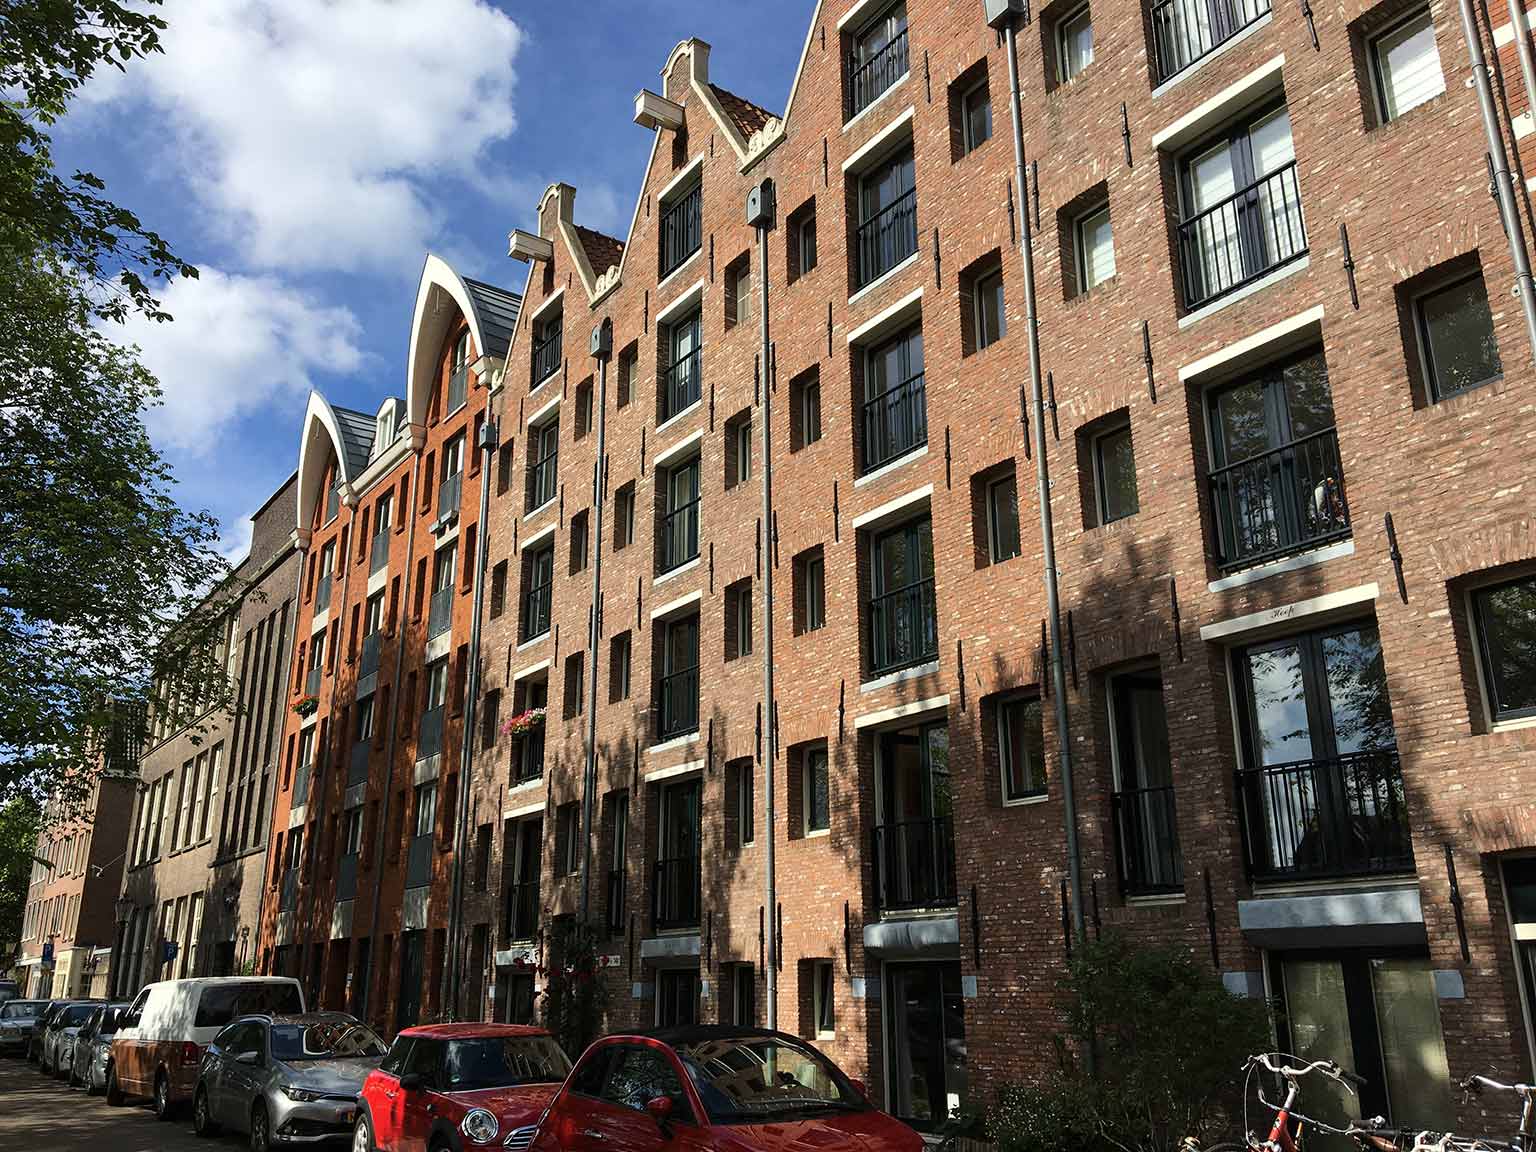 Former warehouses on Nieuwe Teertuinen, Amsterdam